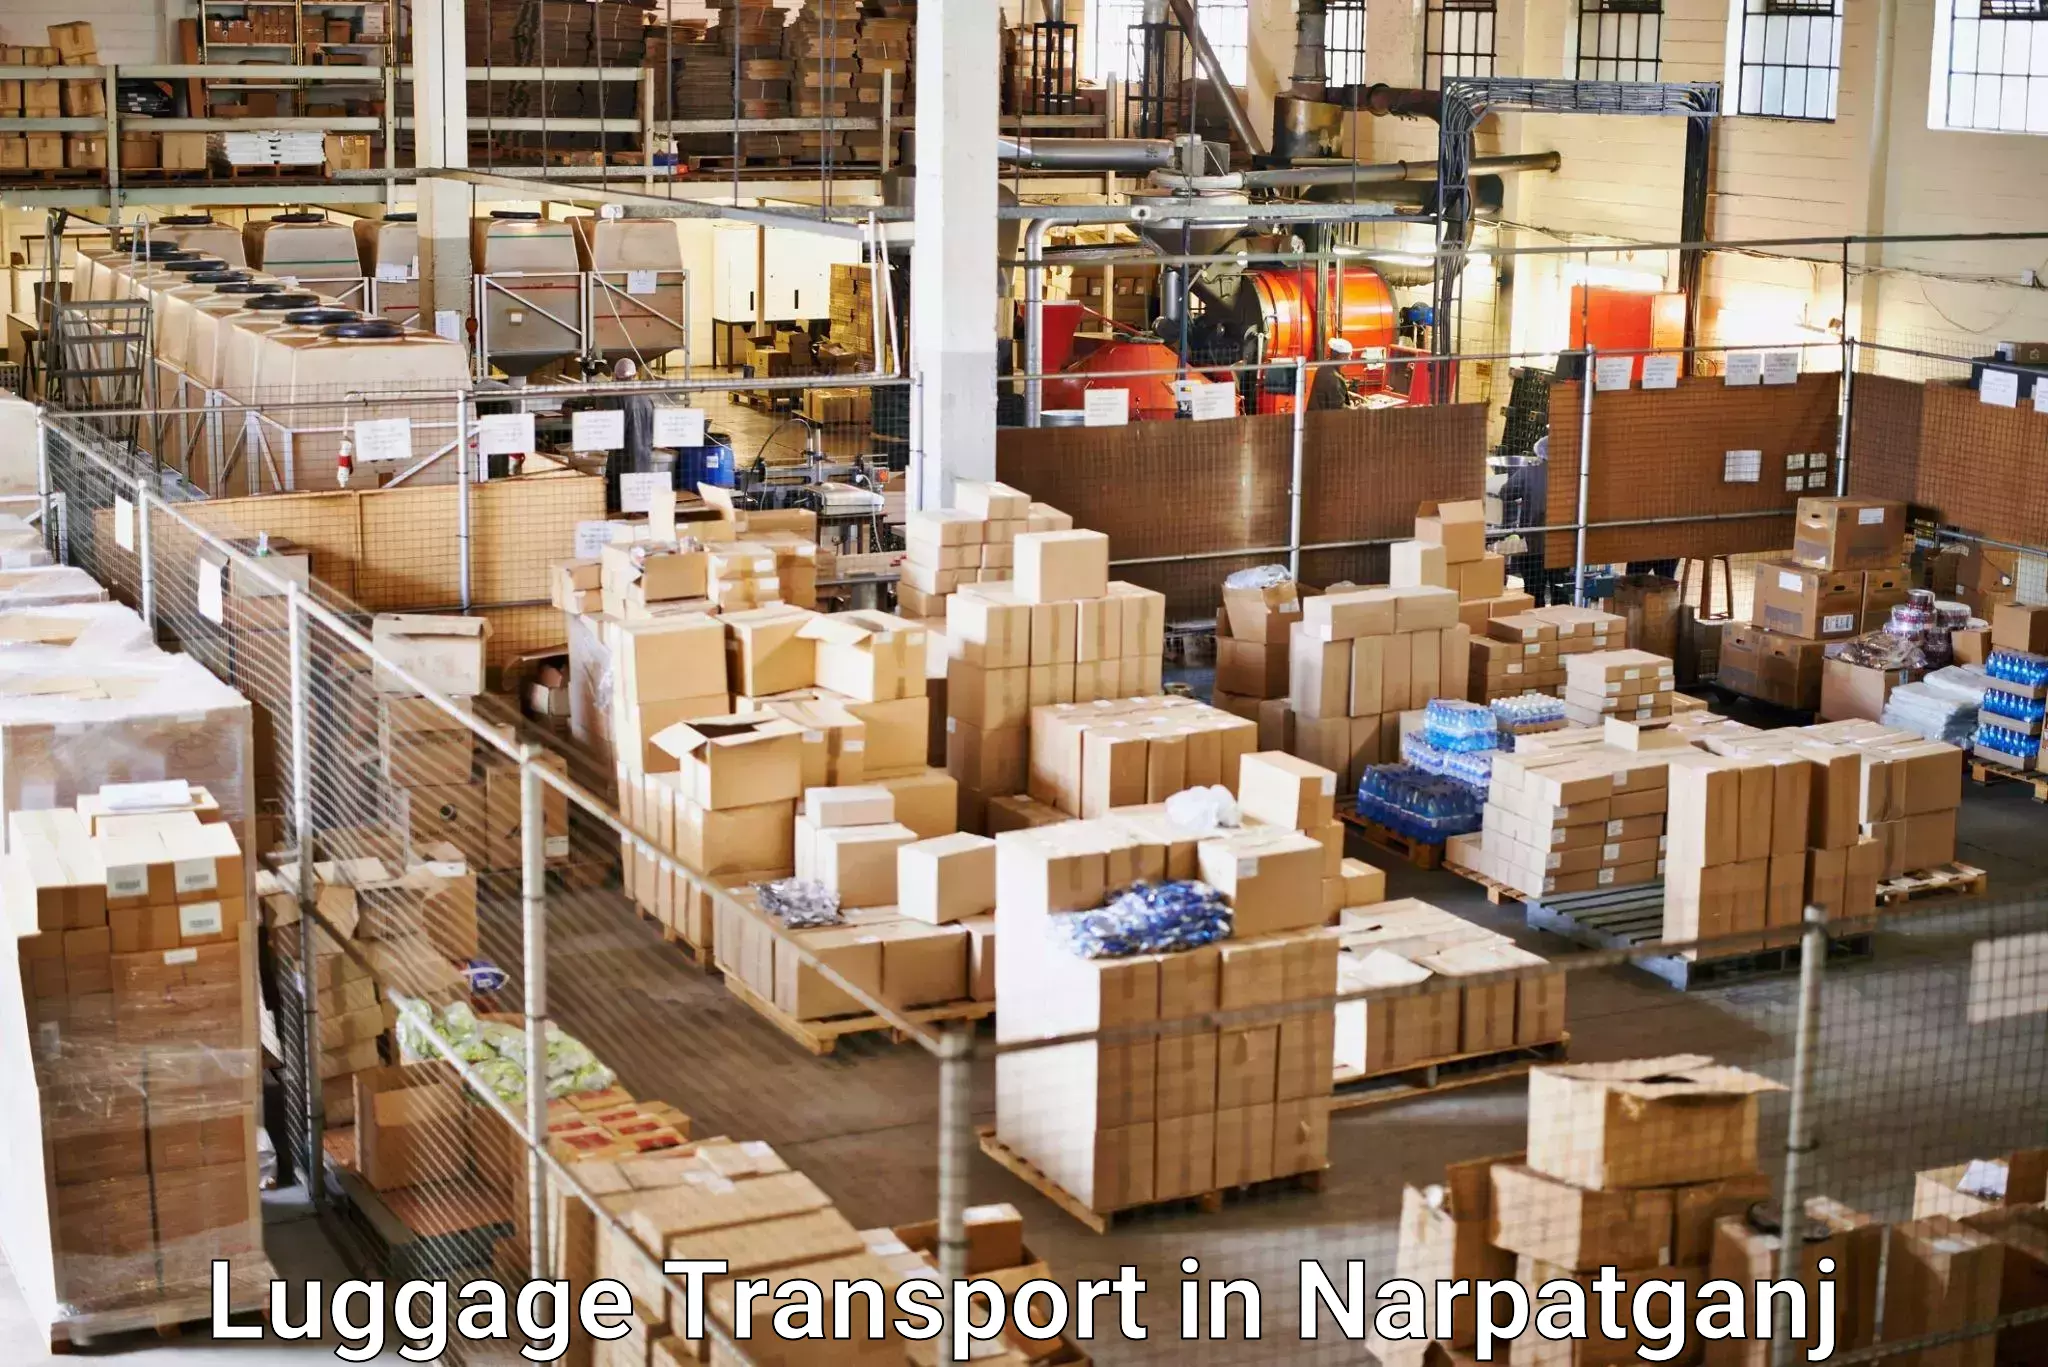 Luggage transport consultancy in Narpatganj